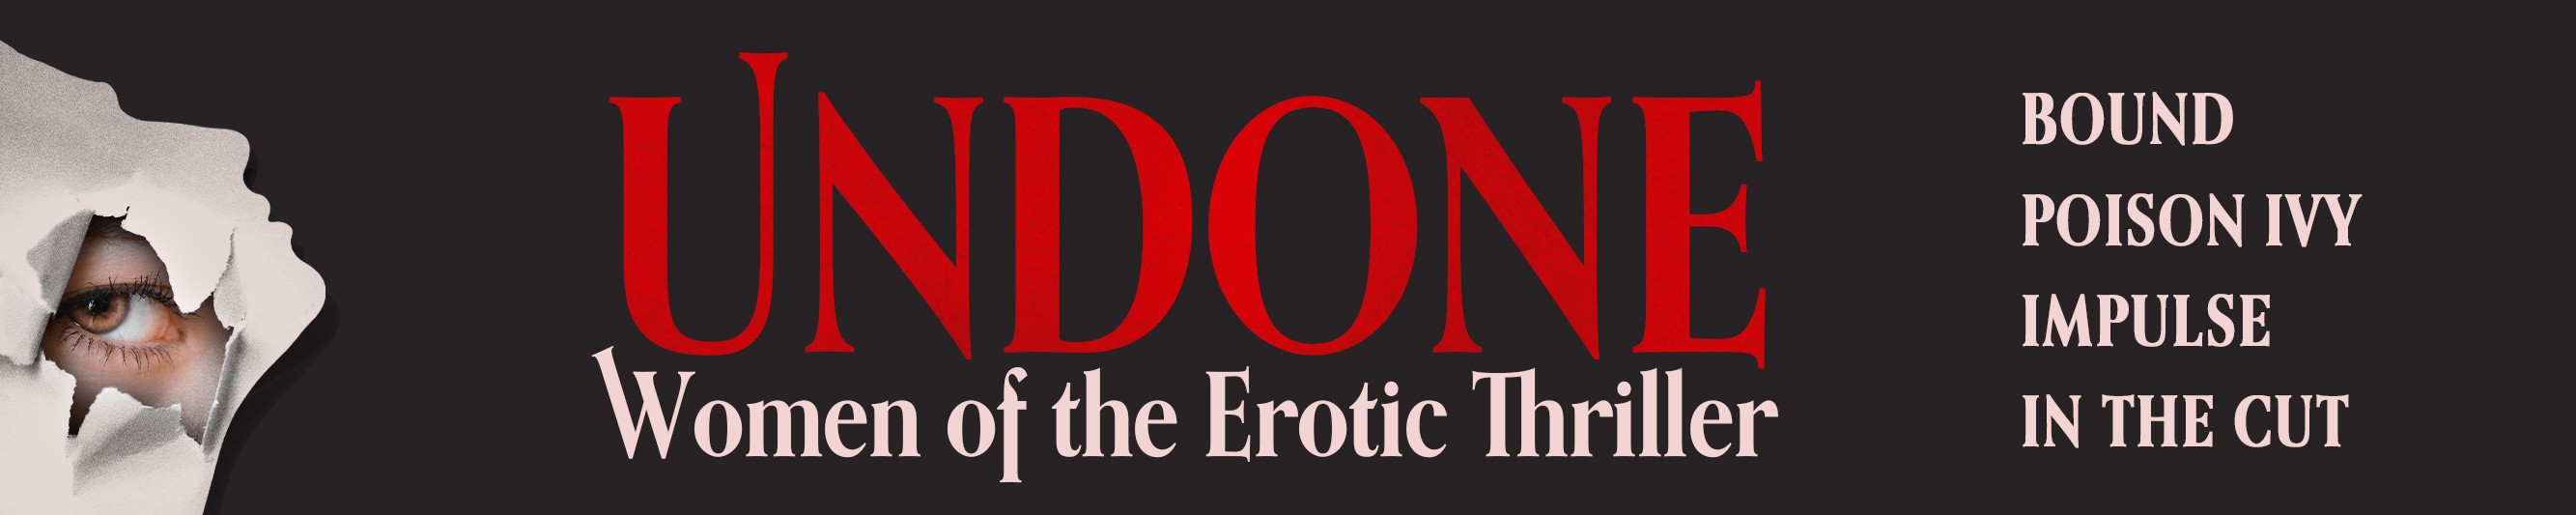 UNDONE - Women of the Erotic Thriller